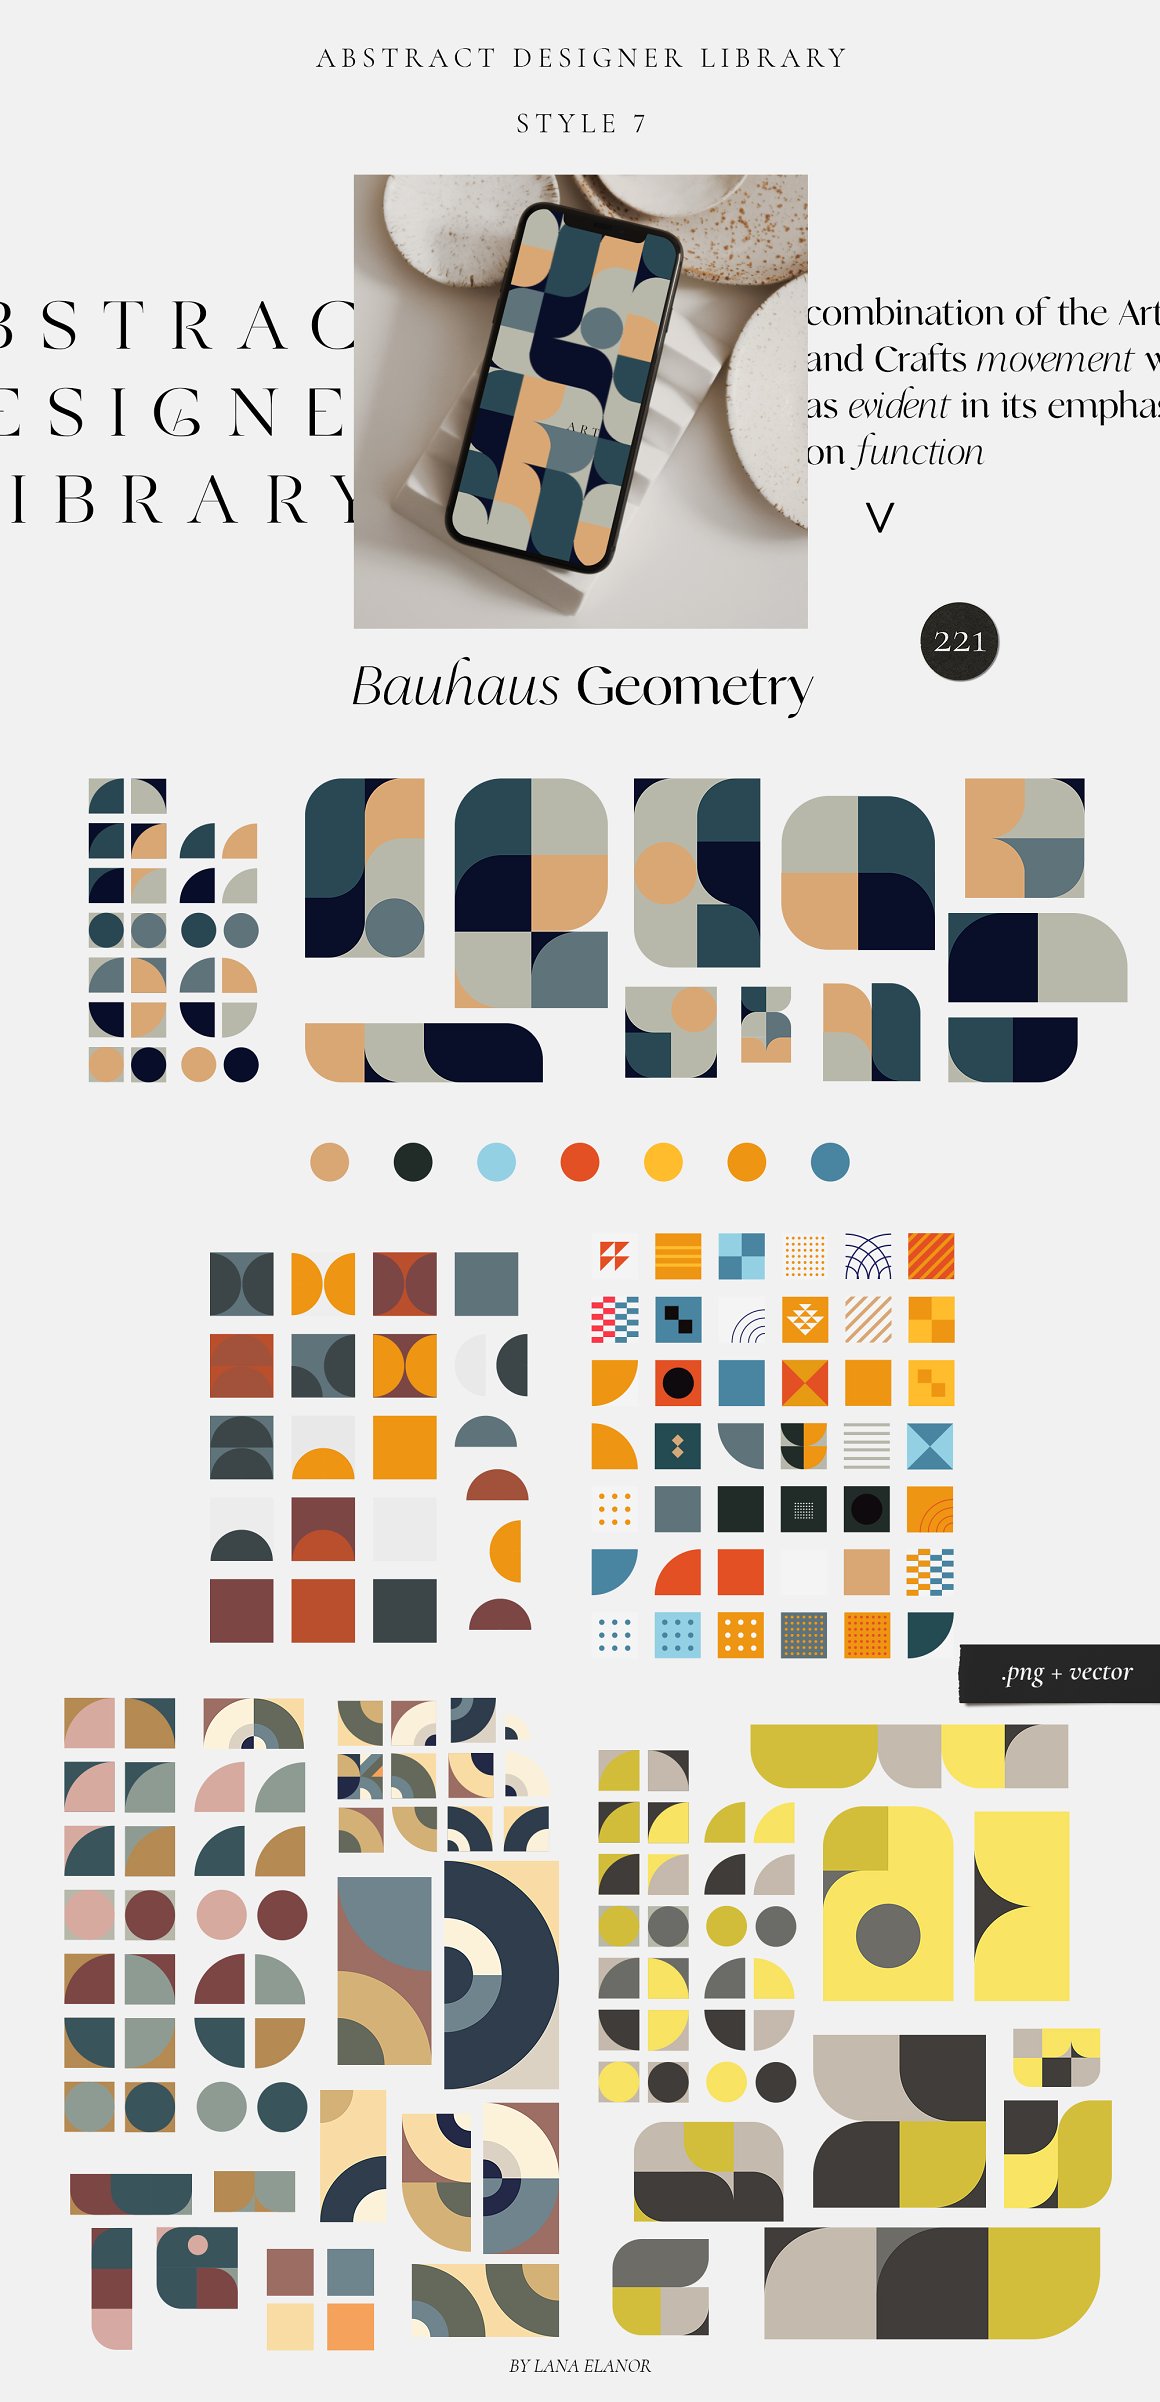 Kit of bauhaus geometry on a gray background.